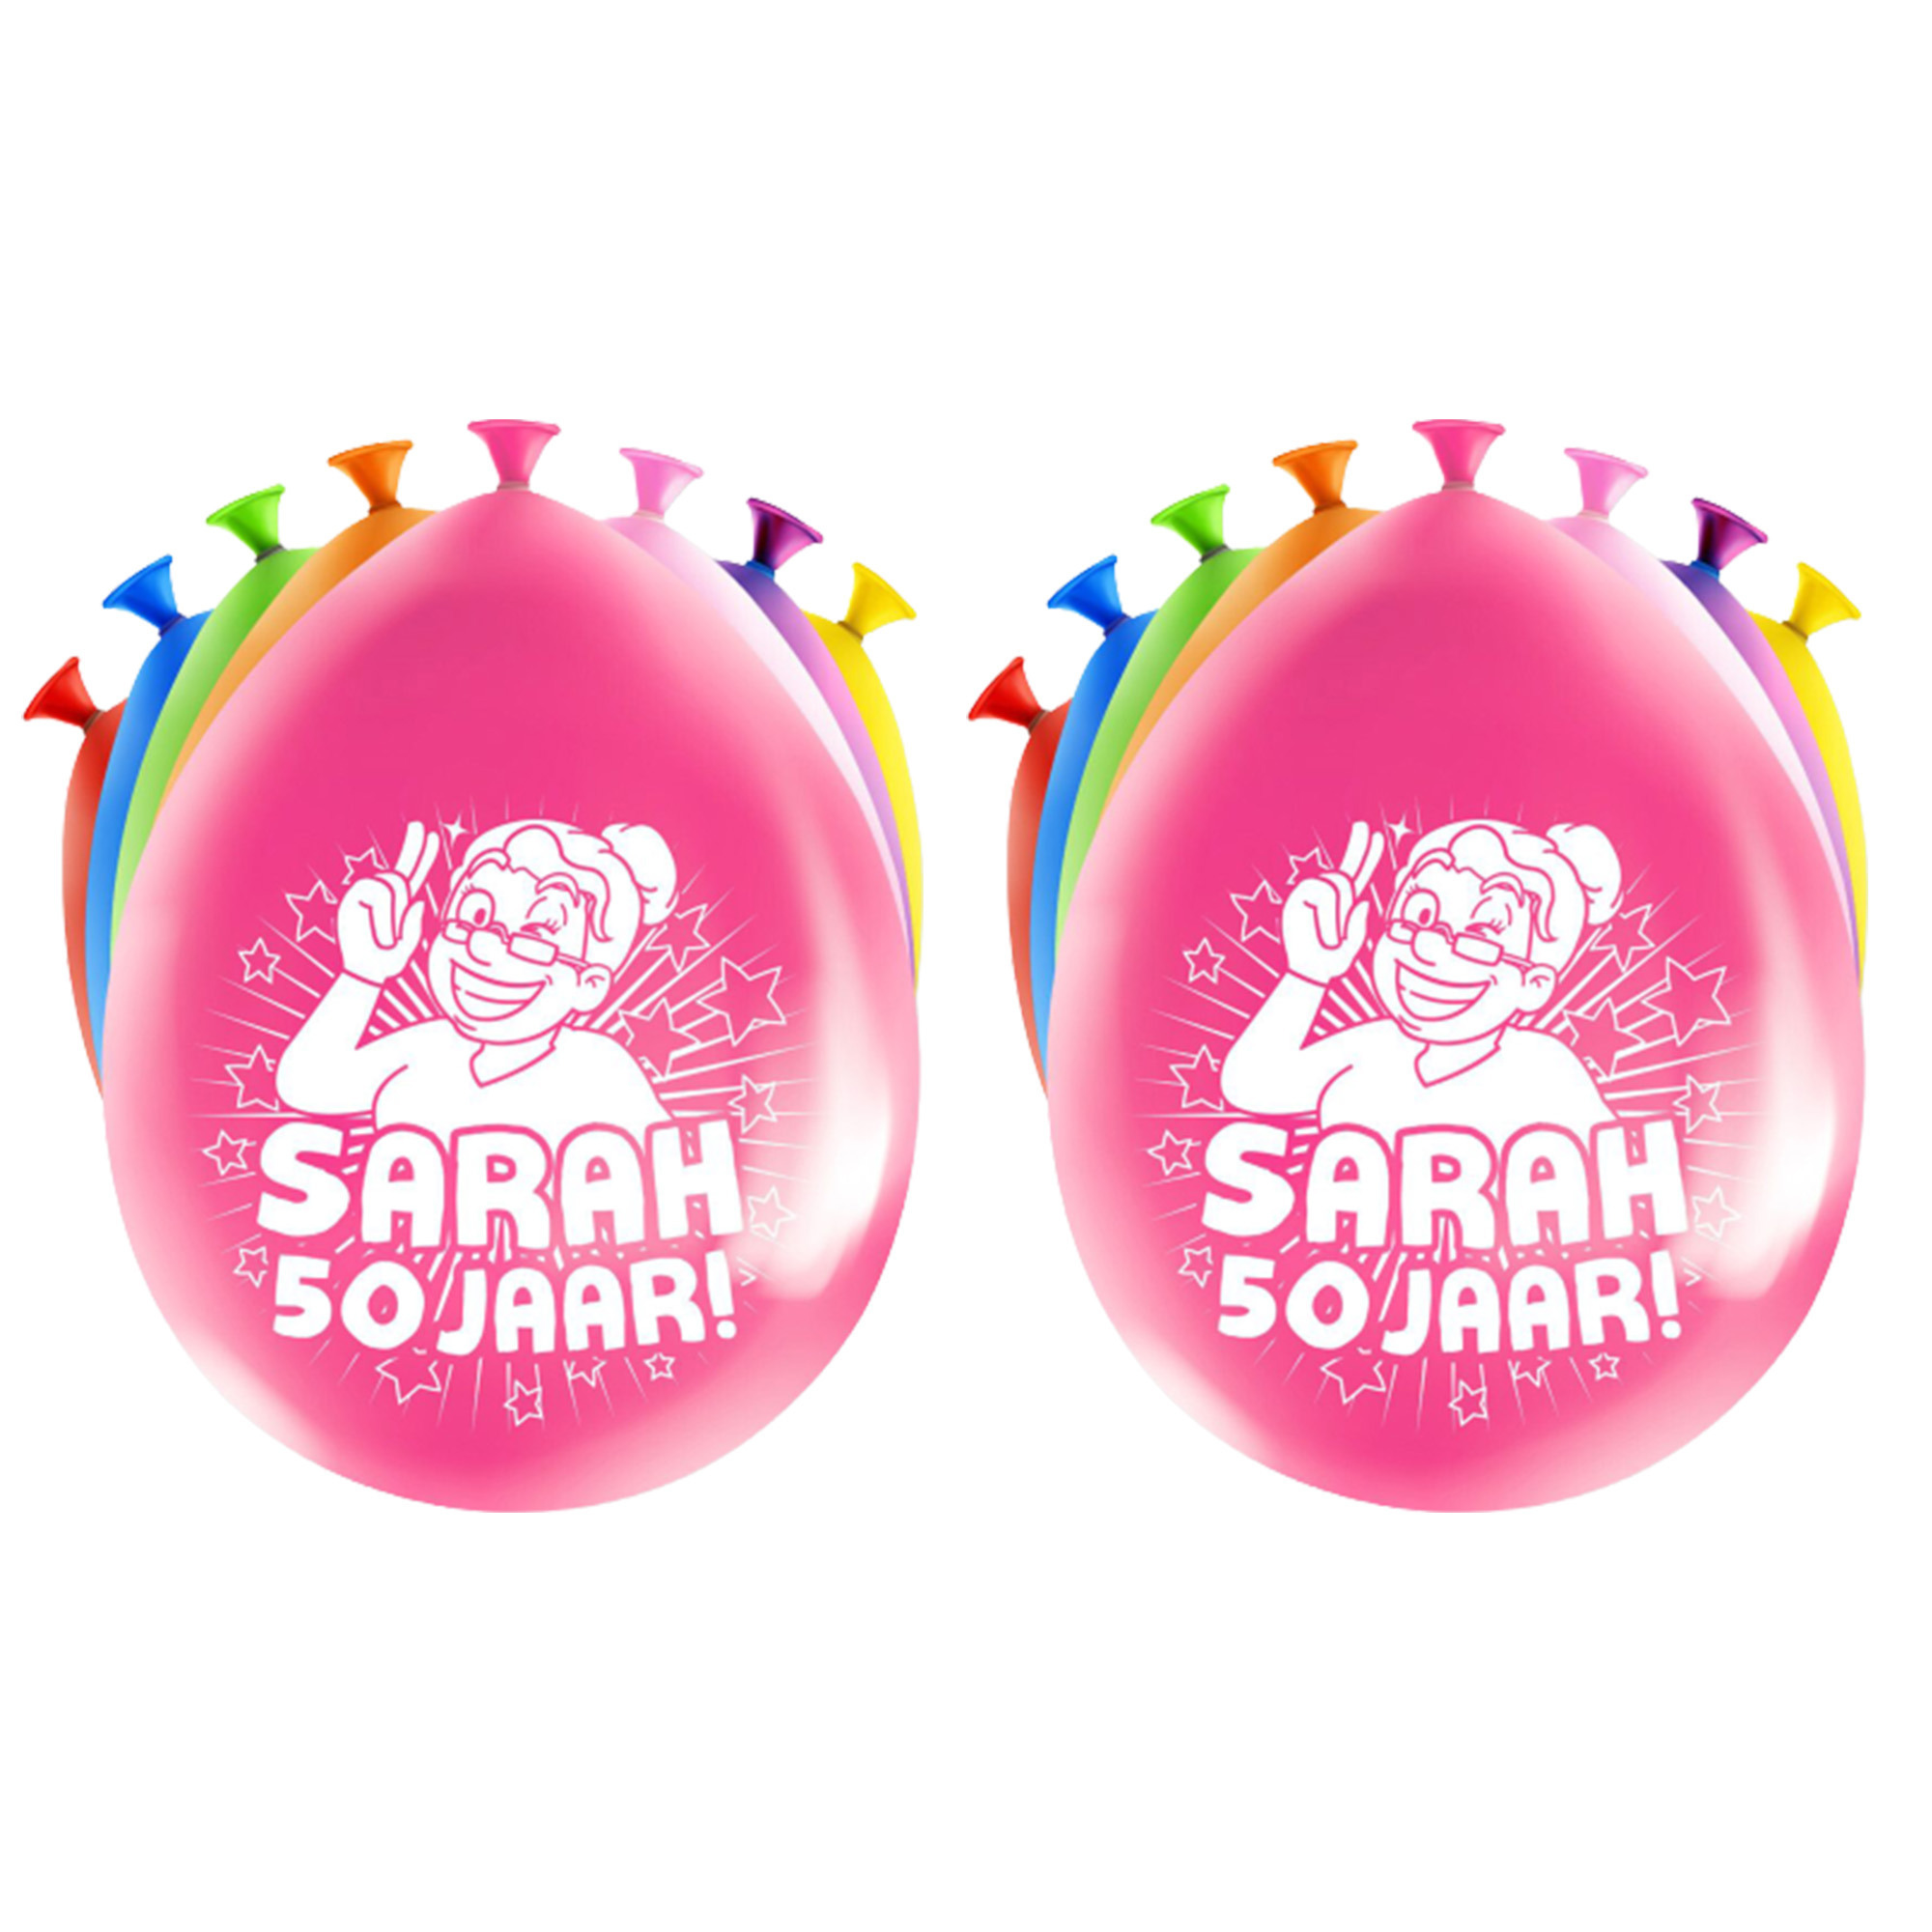 16x stuks Sarah-50 jaar feest ballonnen diverse kleuren latex ca 30 cm